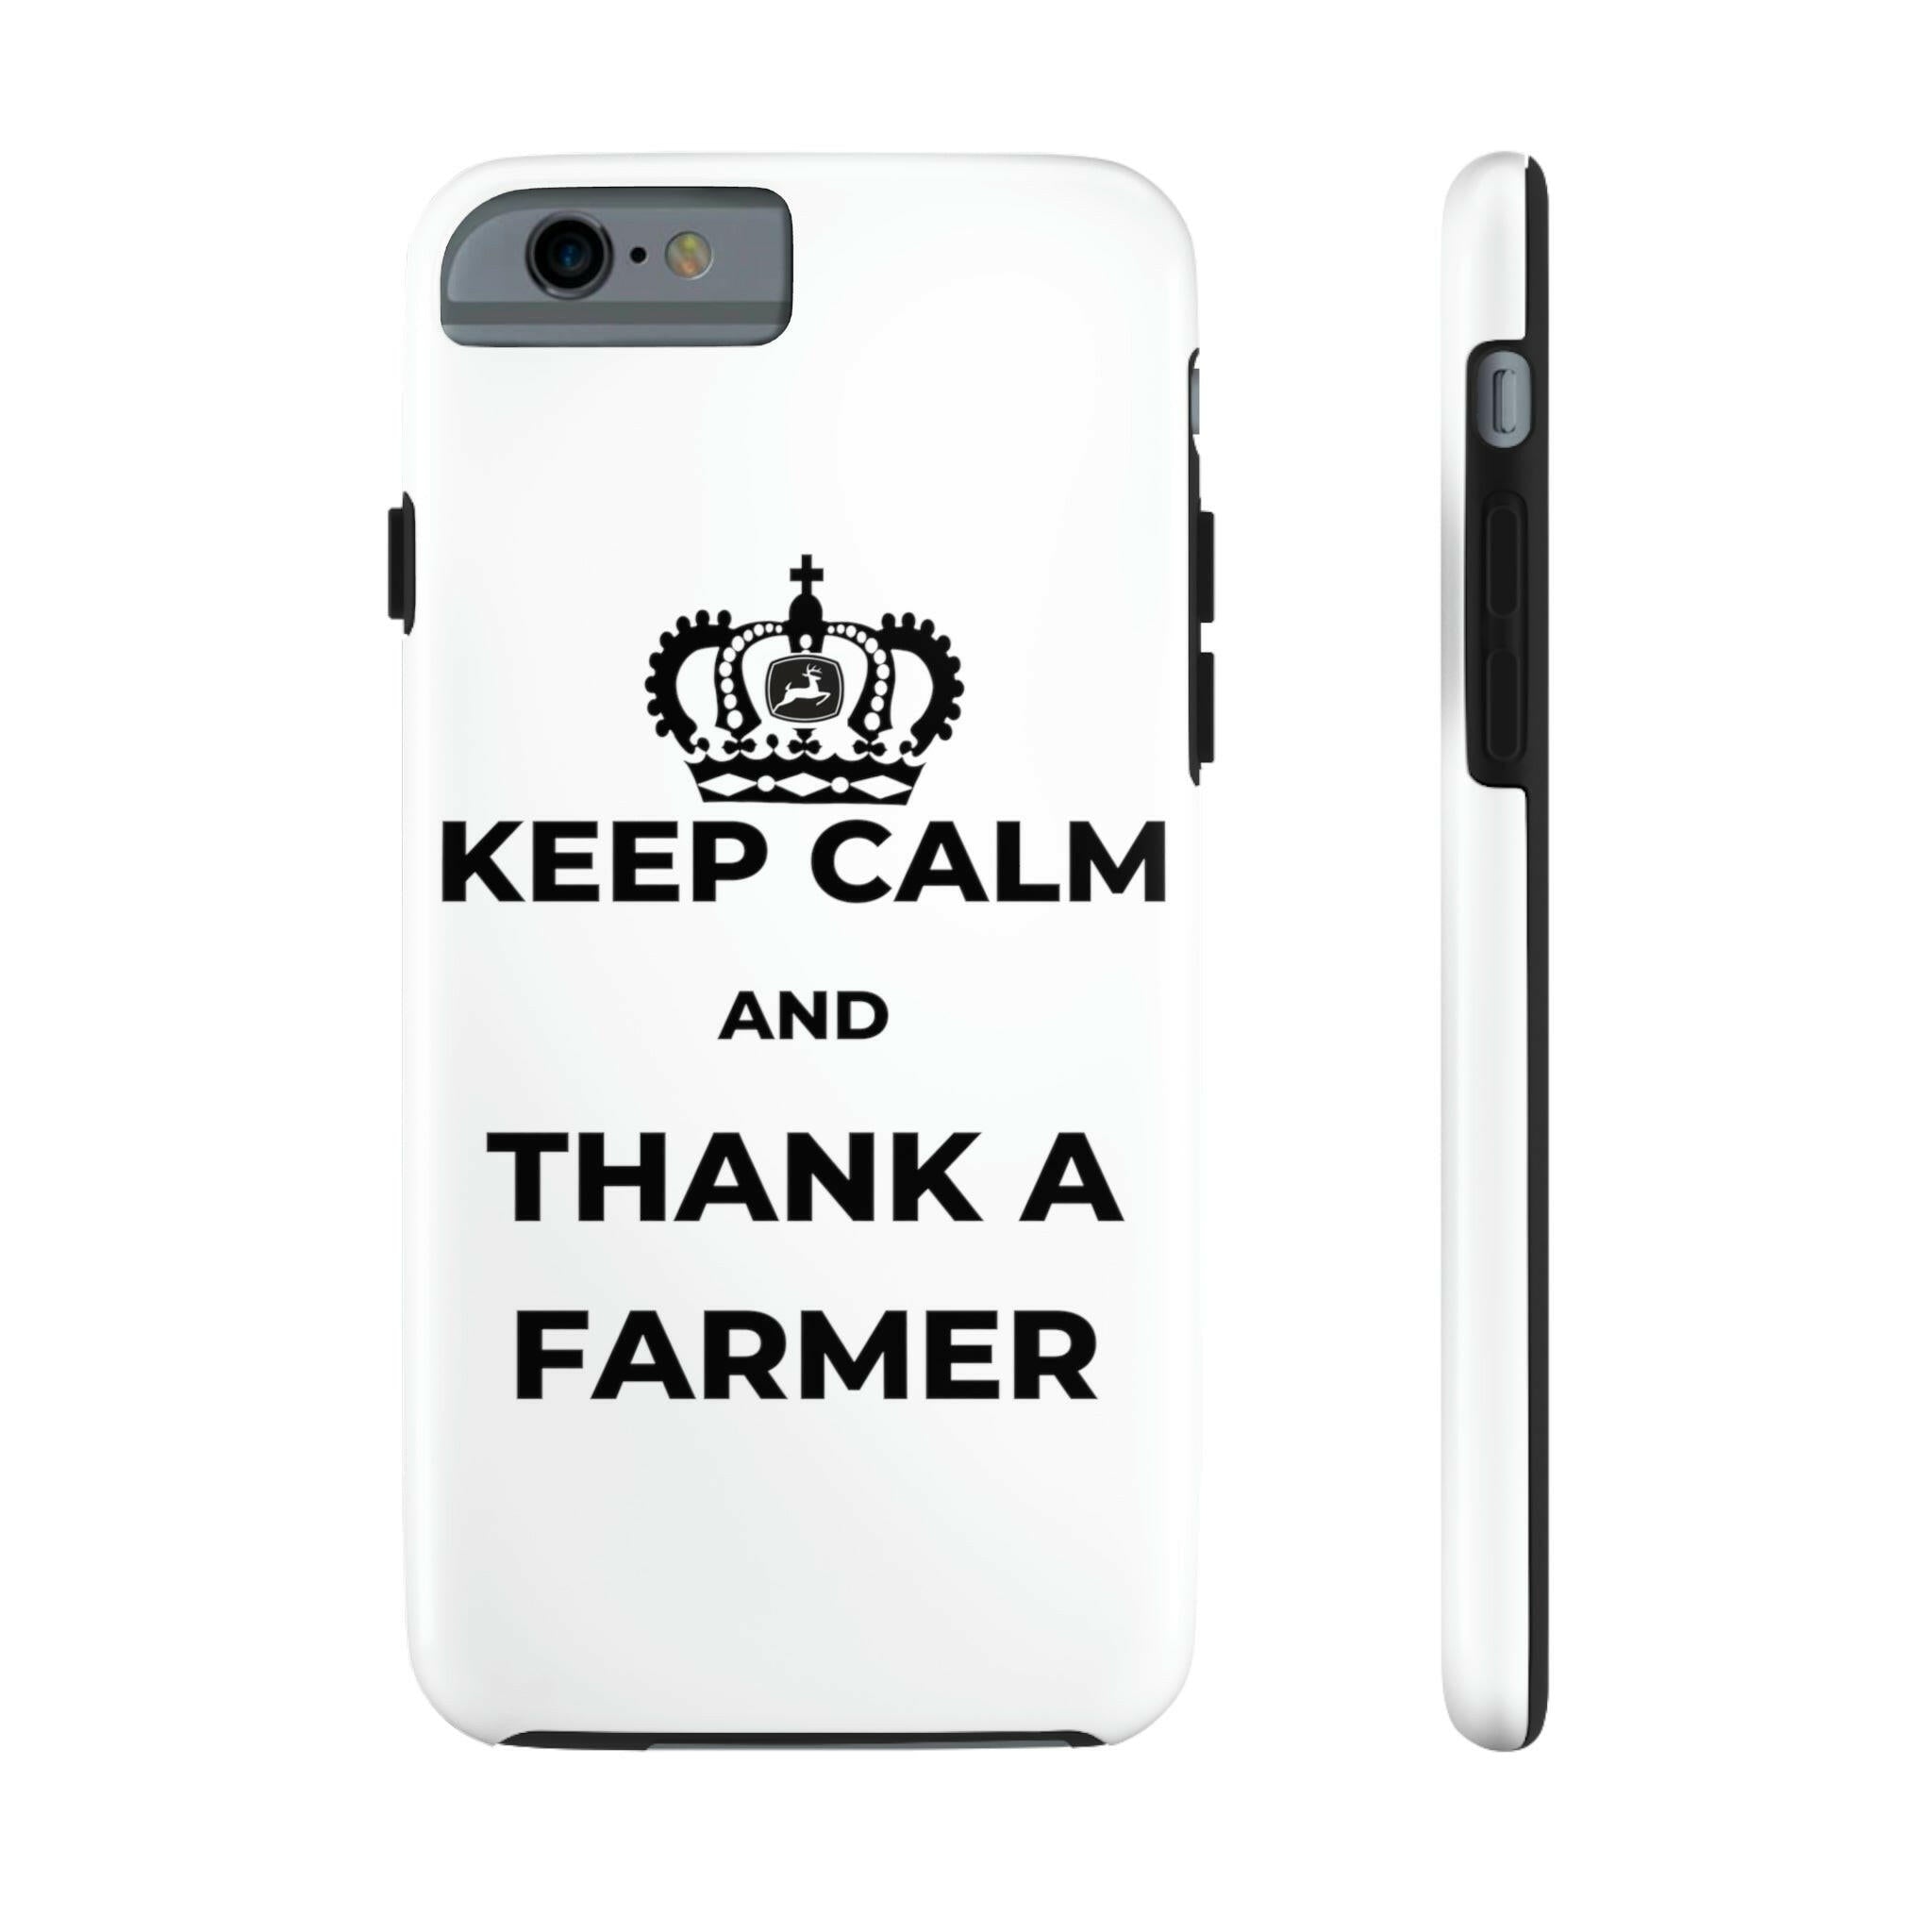 Keep Calm and Thank a Farmer - Tough iPhone Cases.